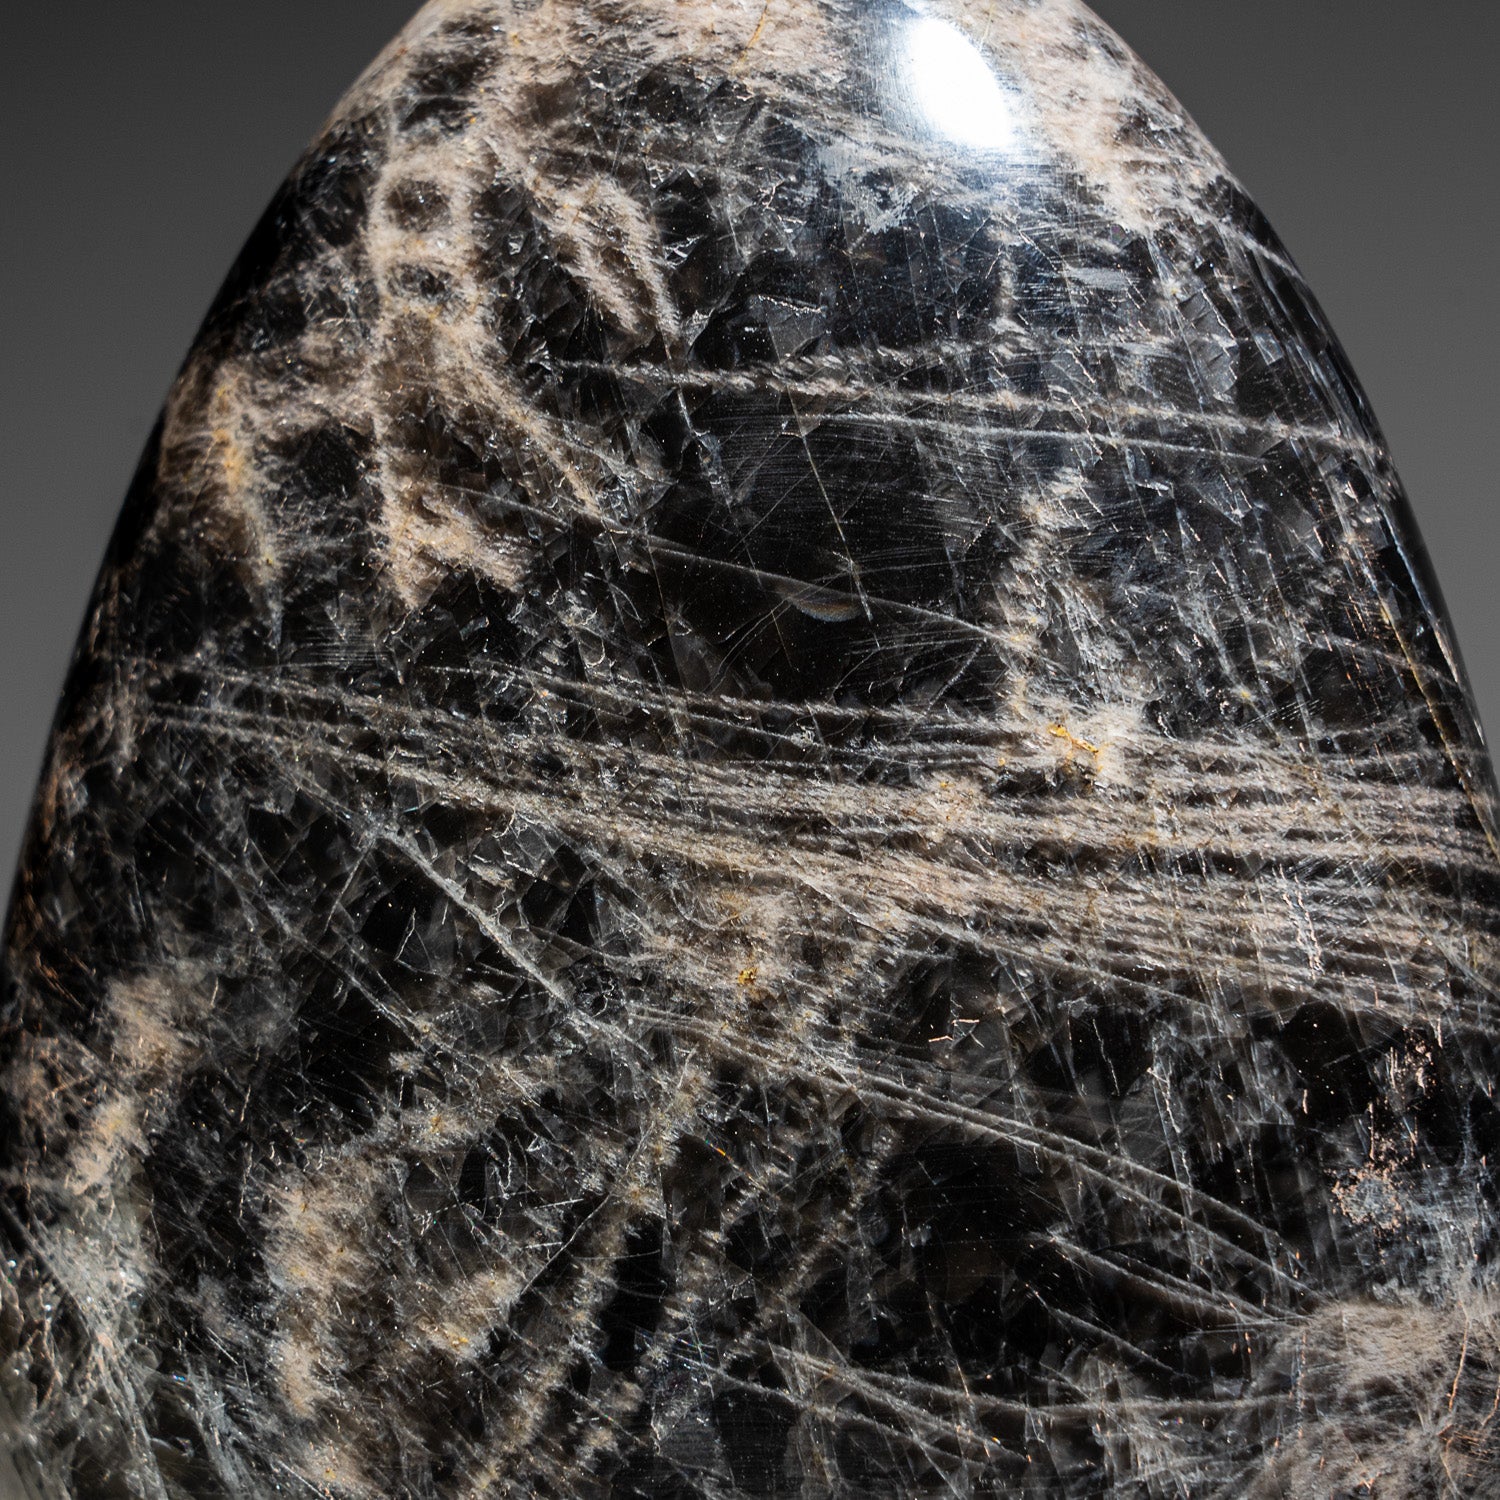 Genuine Polished Black Moonstone Freeform From Madagascar (2.5 lbs)